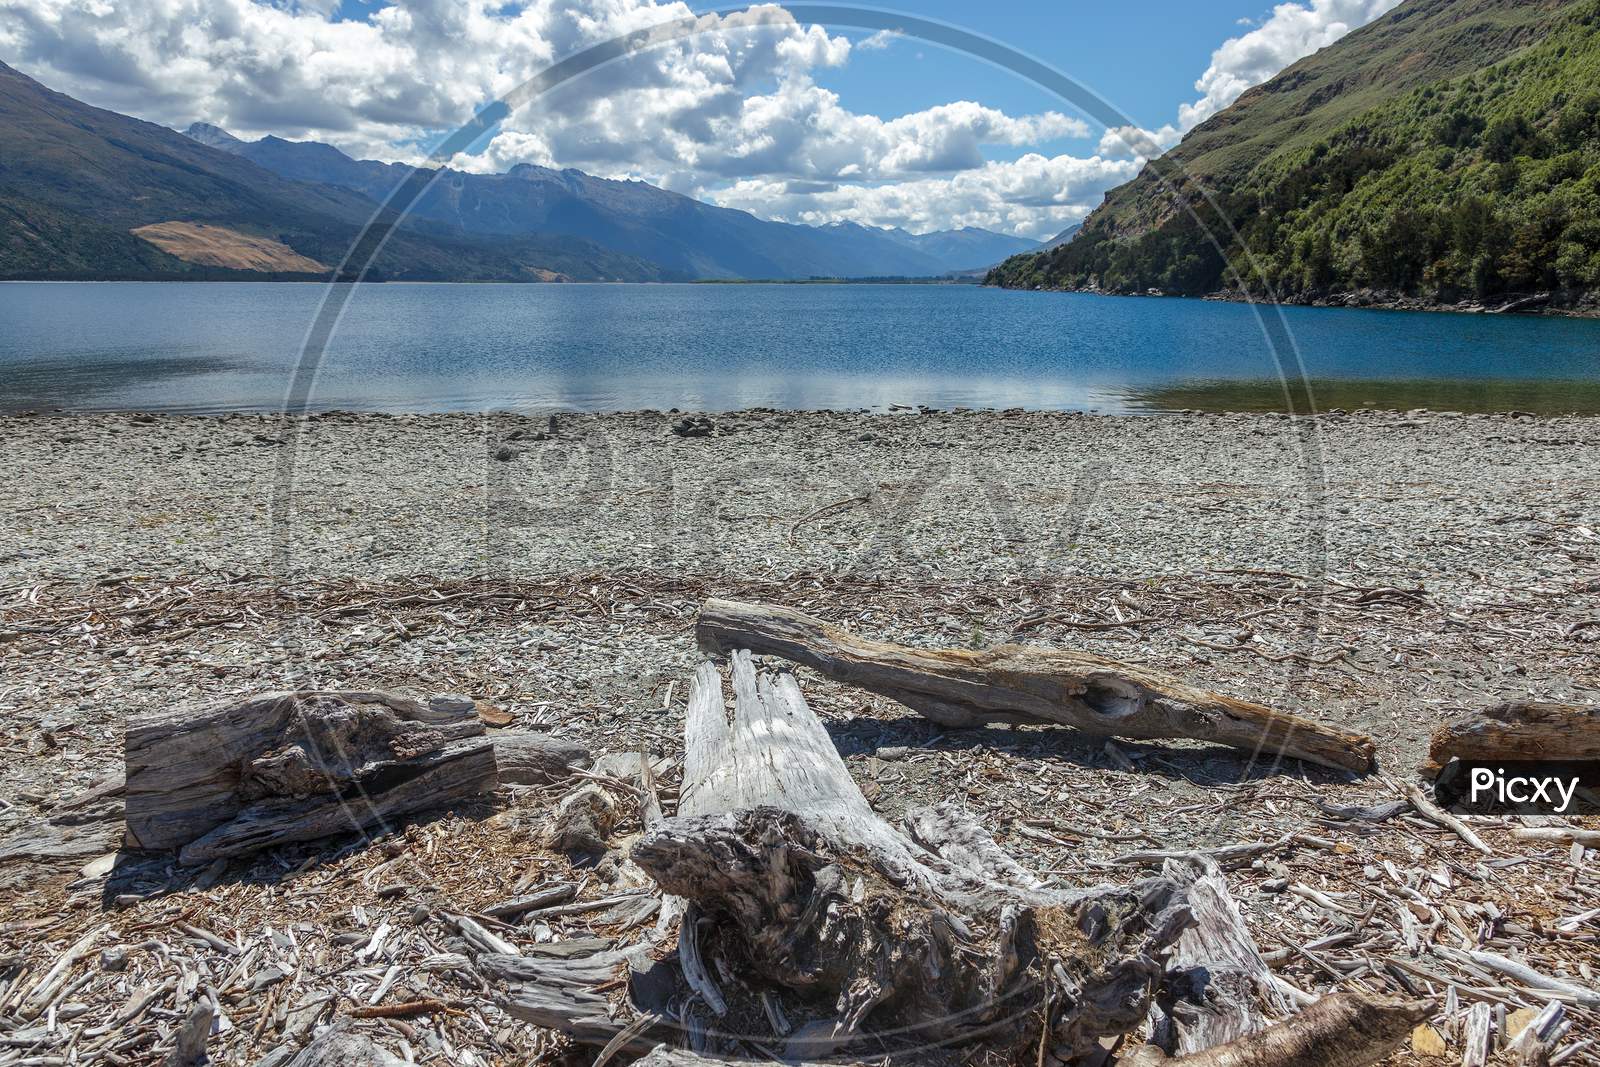 Driftwood On The Shore Of Lake Wanaka In New Zealand